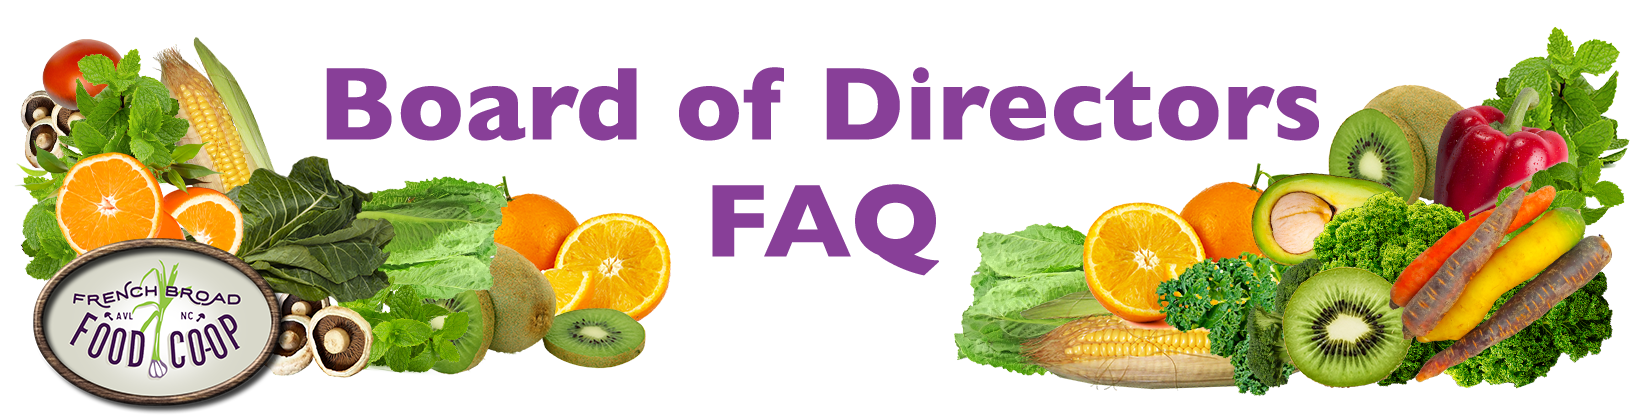 Board of Directors FAQ section header.